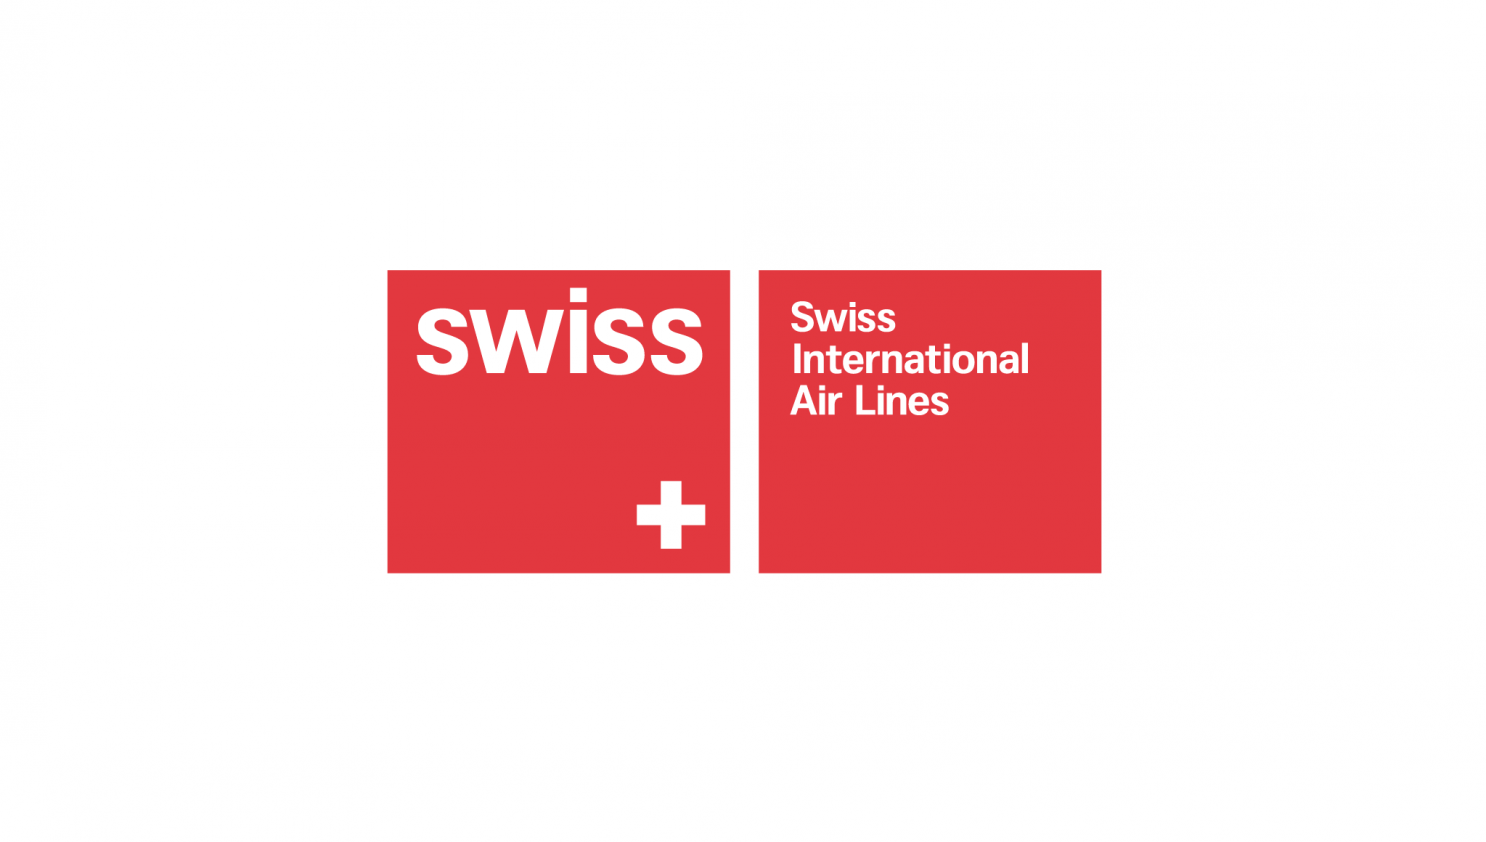 Swiss International Airlines Logo - Swiss International Air Lines - Winkreative | Airlines | Airline ...